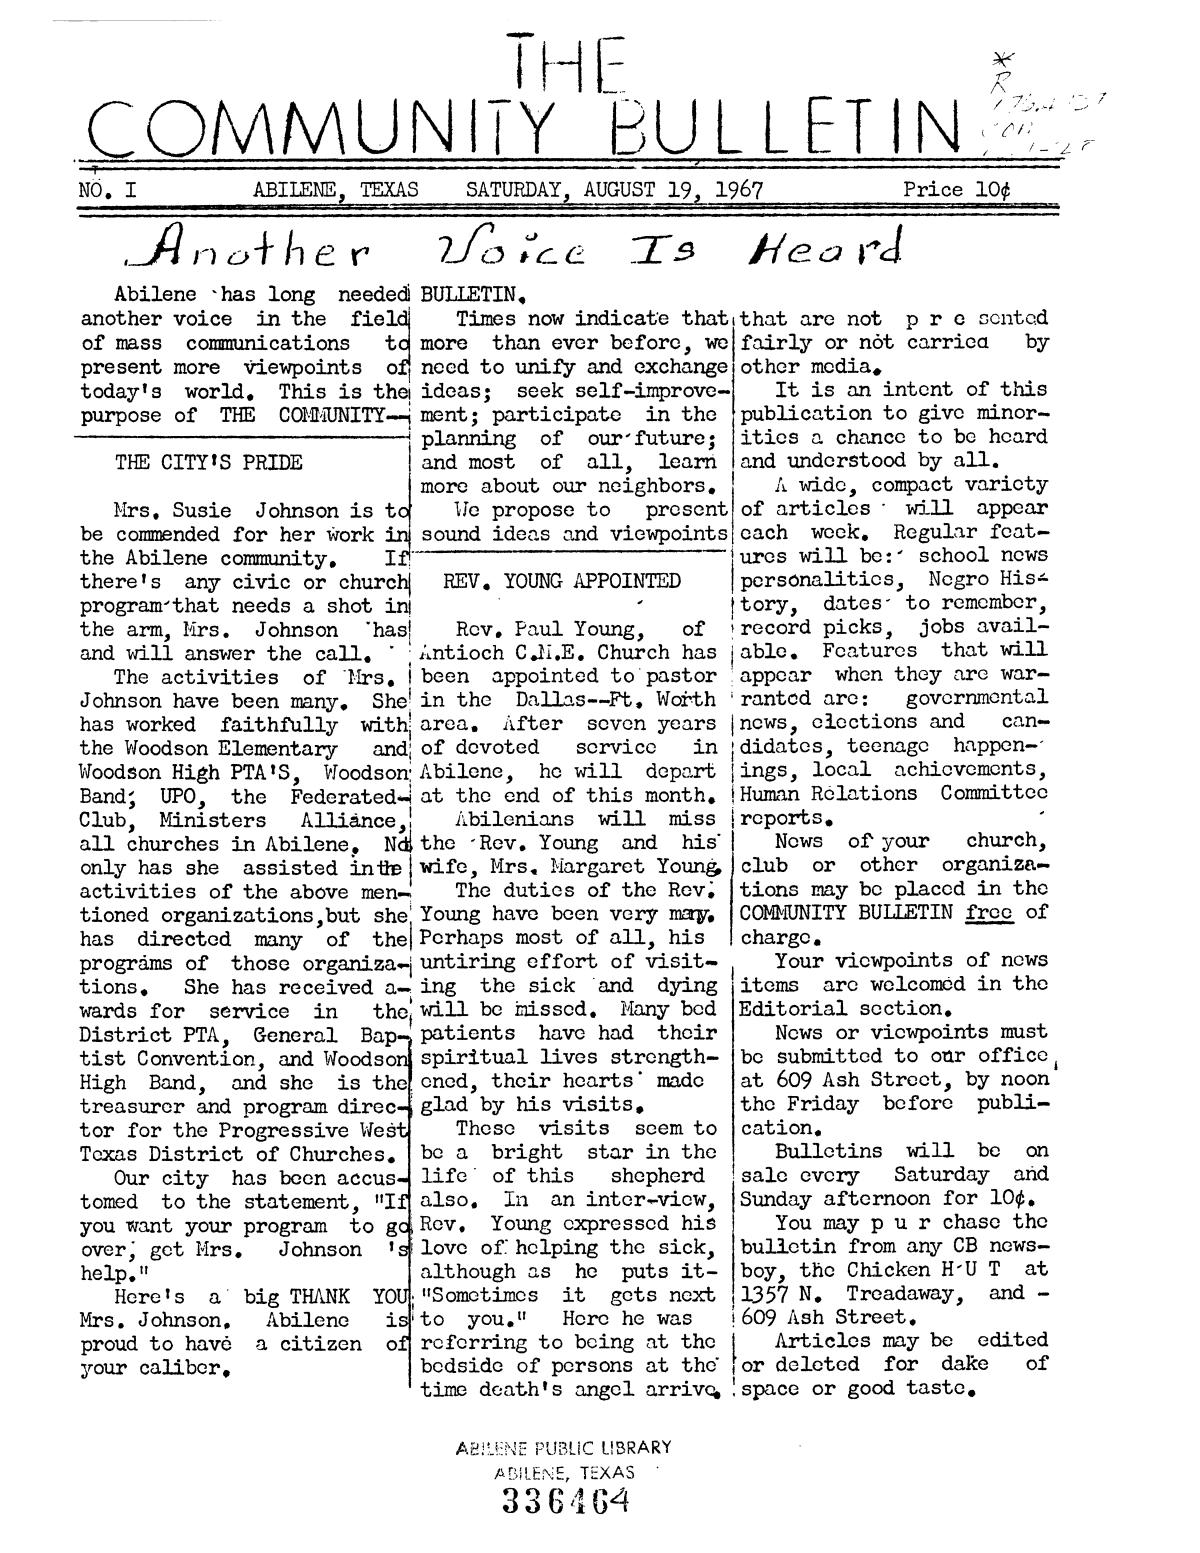 The Community Bulletin (Abilene, Texas), No. 1, Saturday, August 19, 1967
                                                
                                                    1
                                                